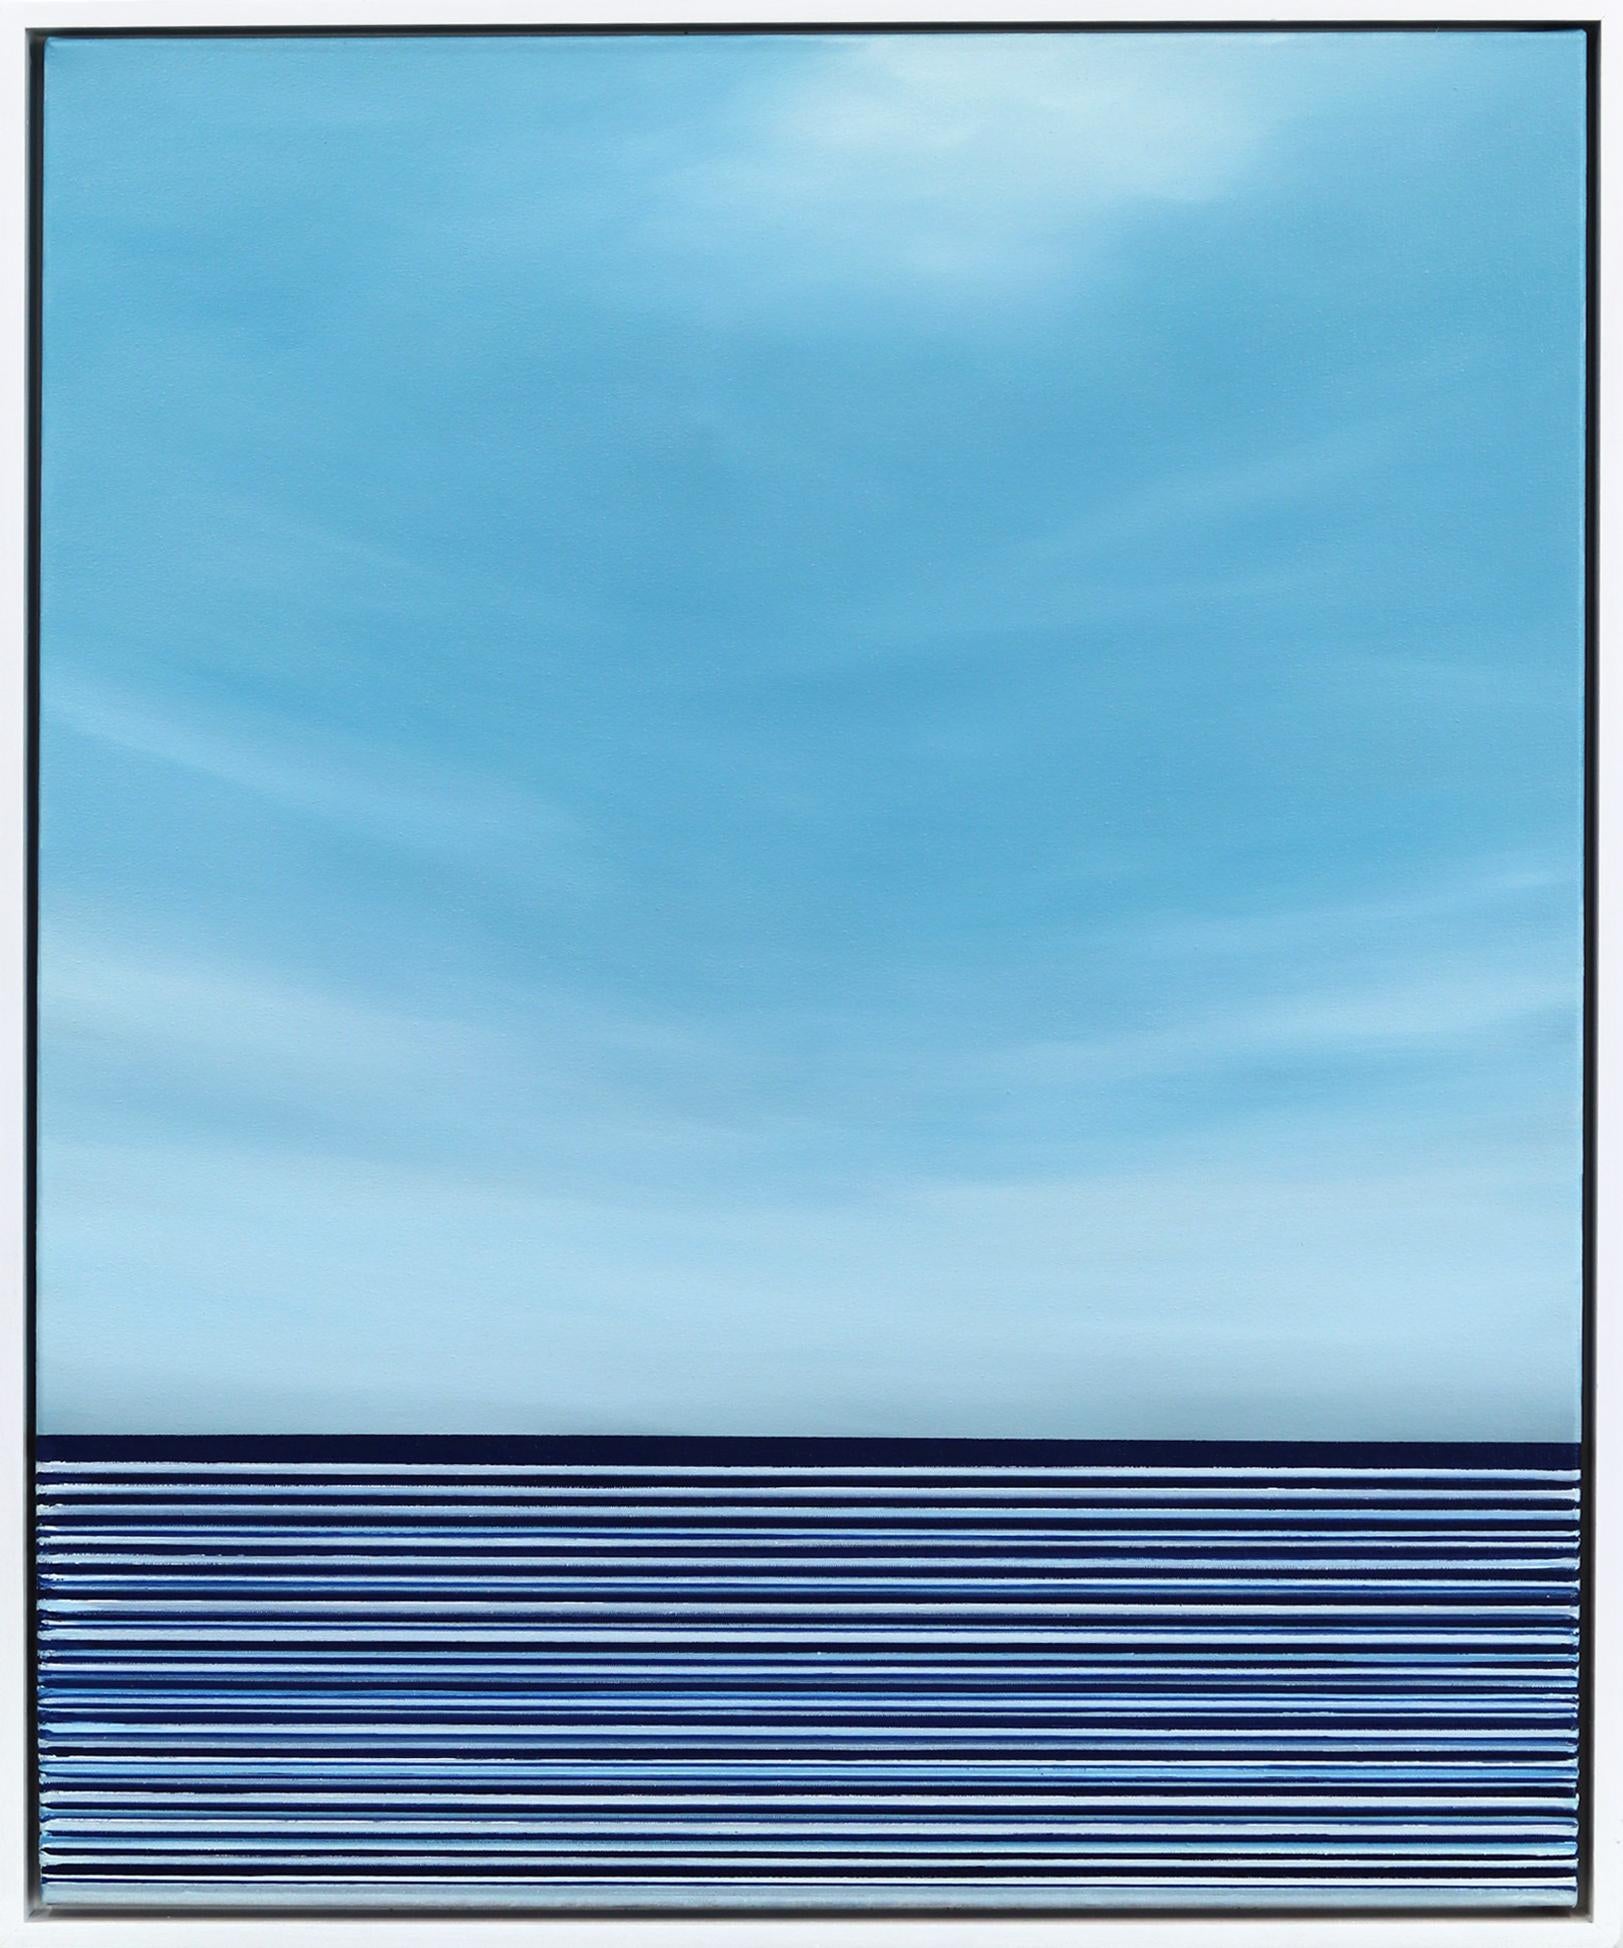 Sin título nº 769 - Obra de arte minimalista contemporánea enmarcada Paisaje oceánico azul